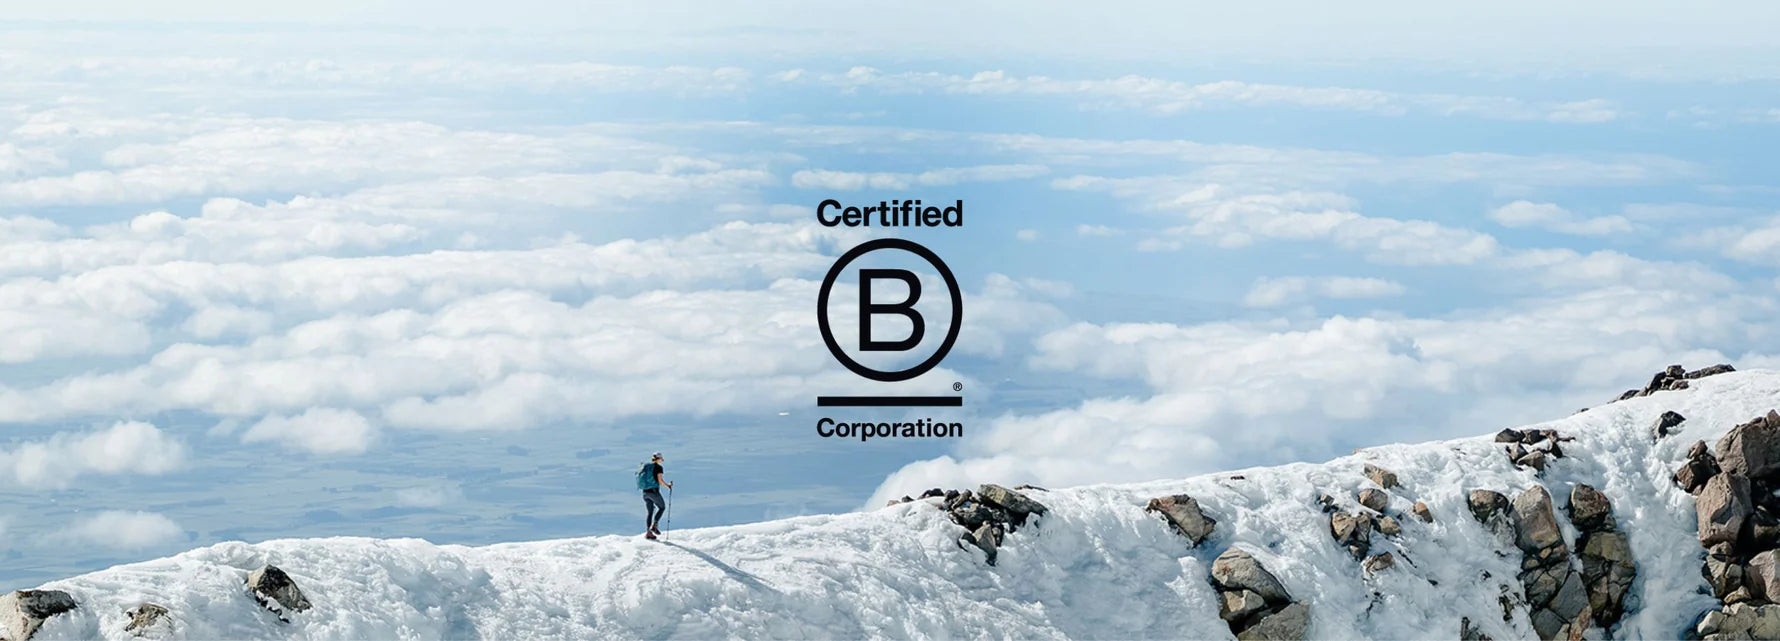 XTM Brand achieves Certified B Corporation status.